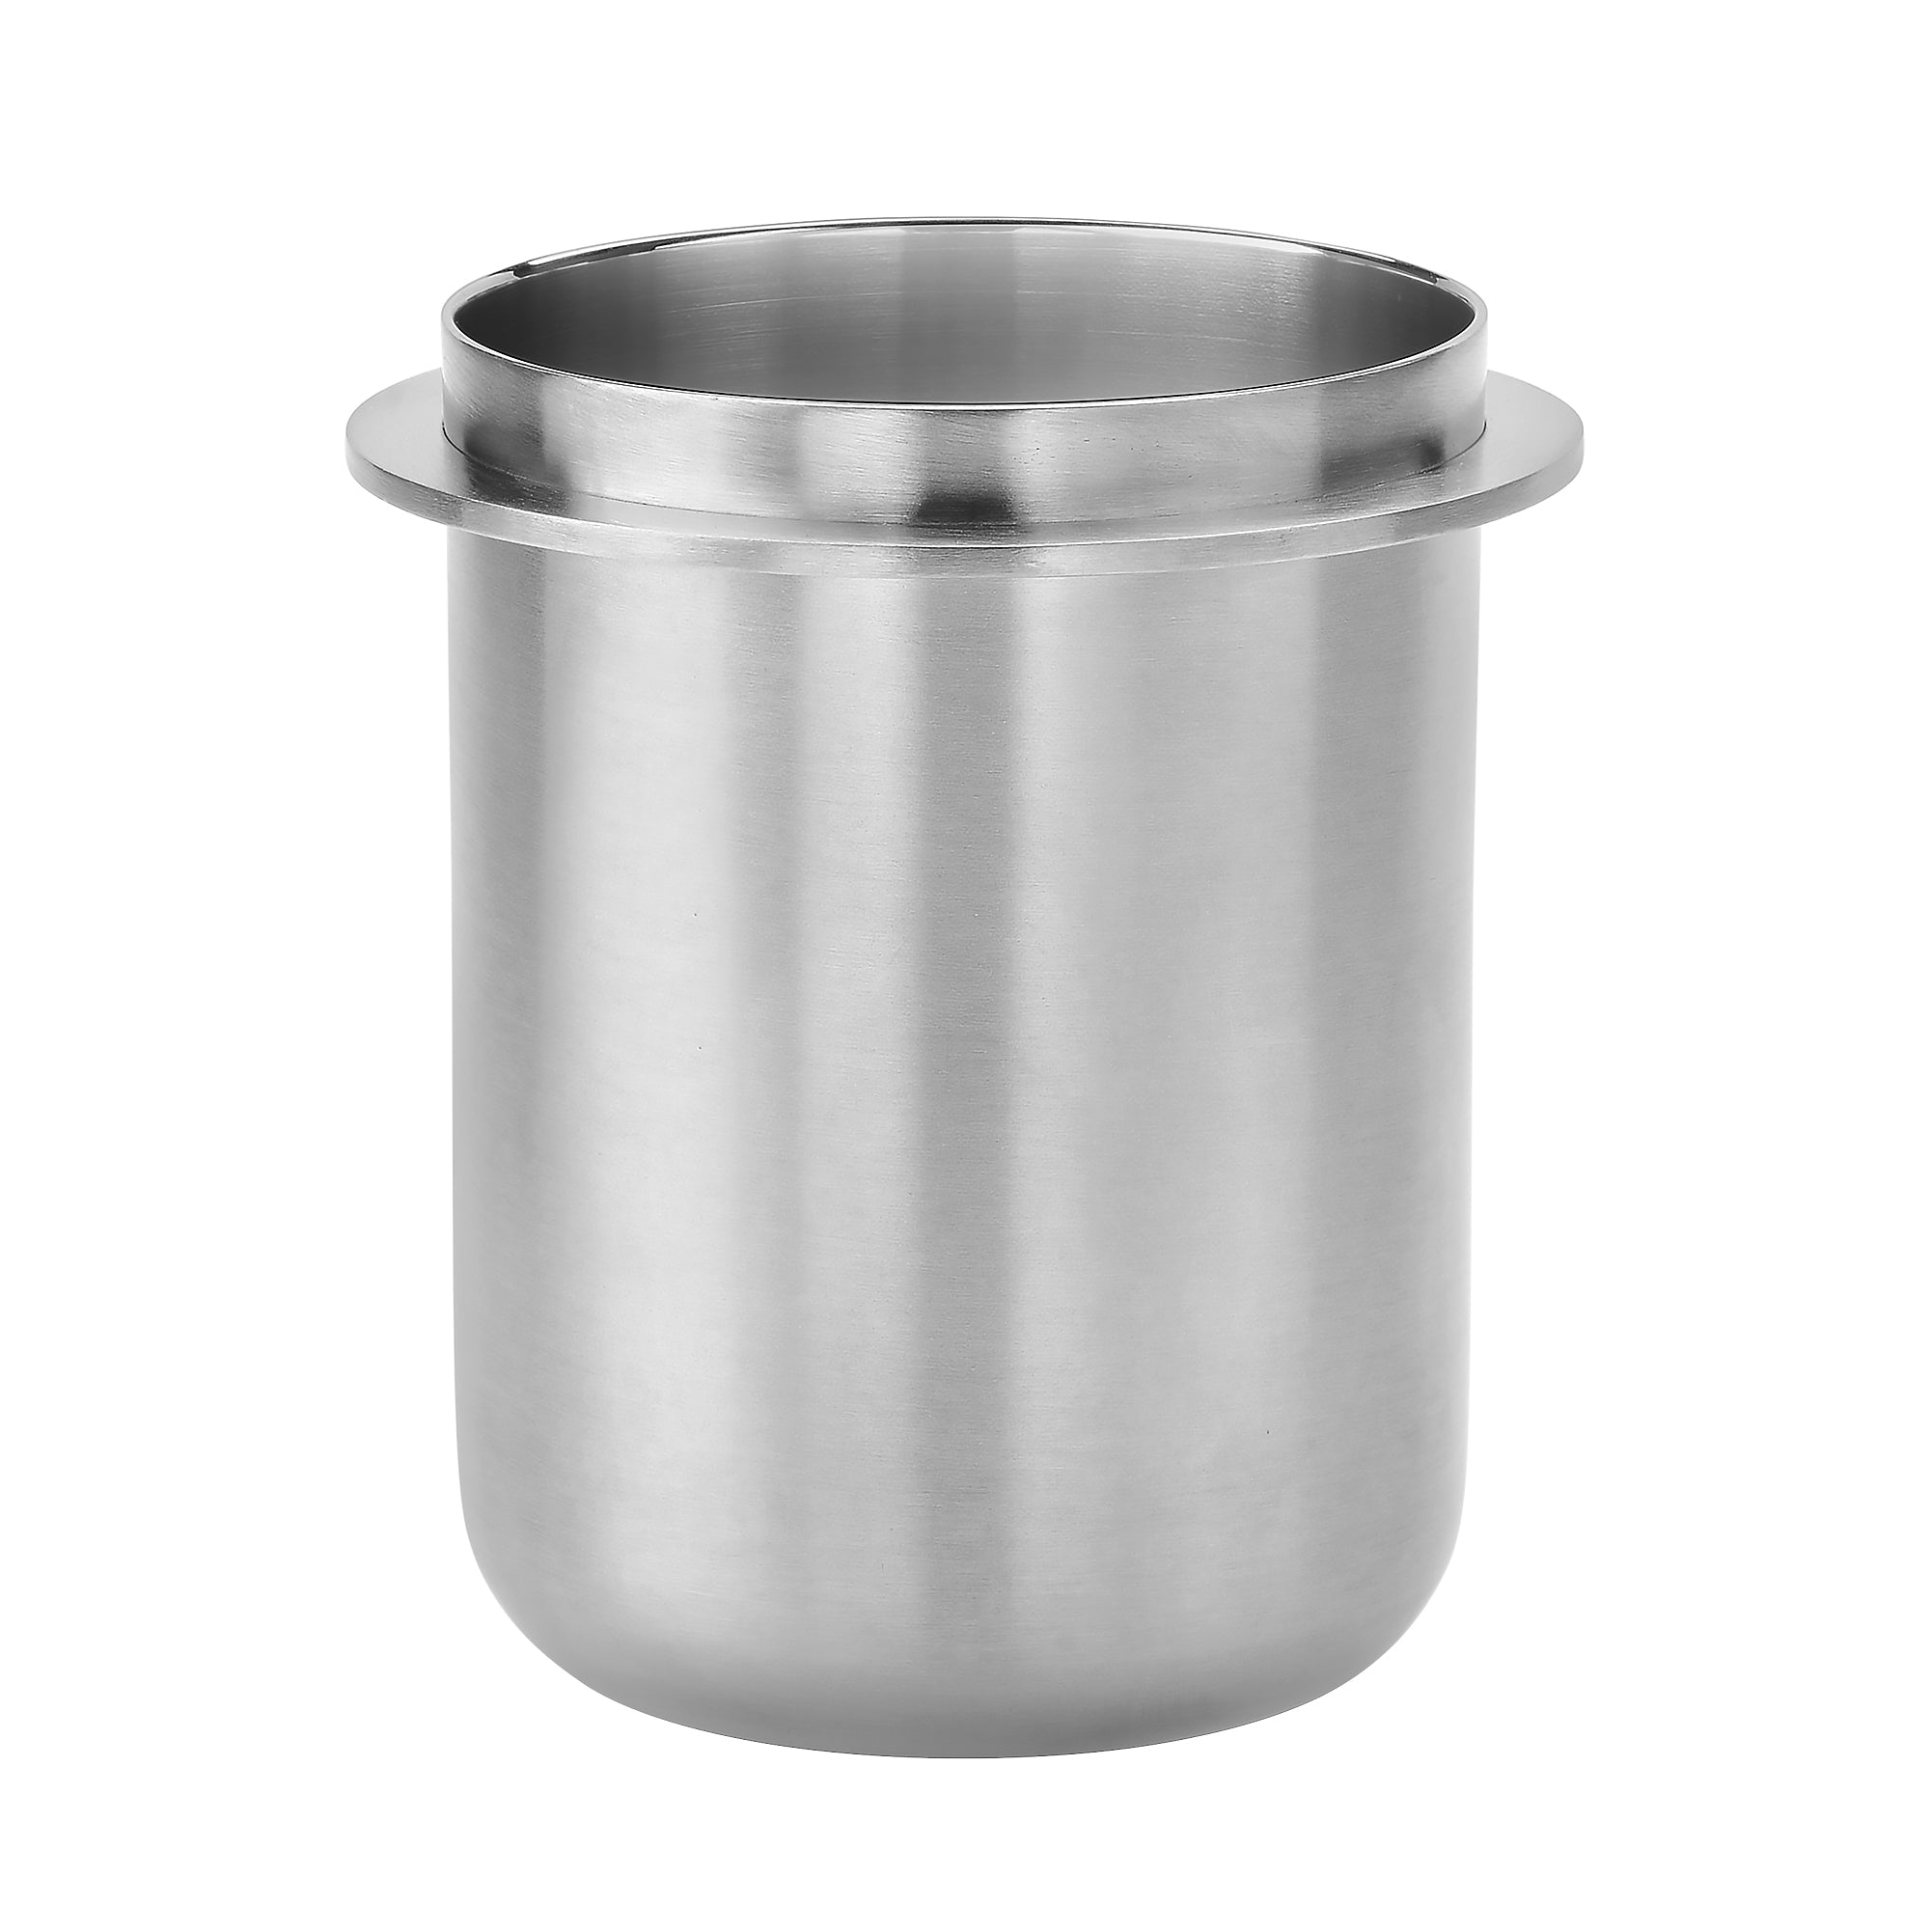 Normcore / 58mm Portafilter Dosing Cup - Tall Version